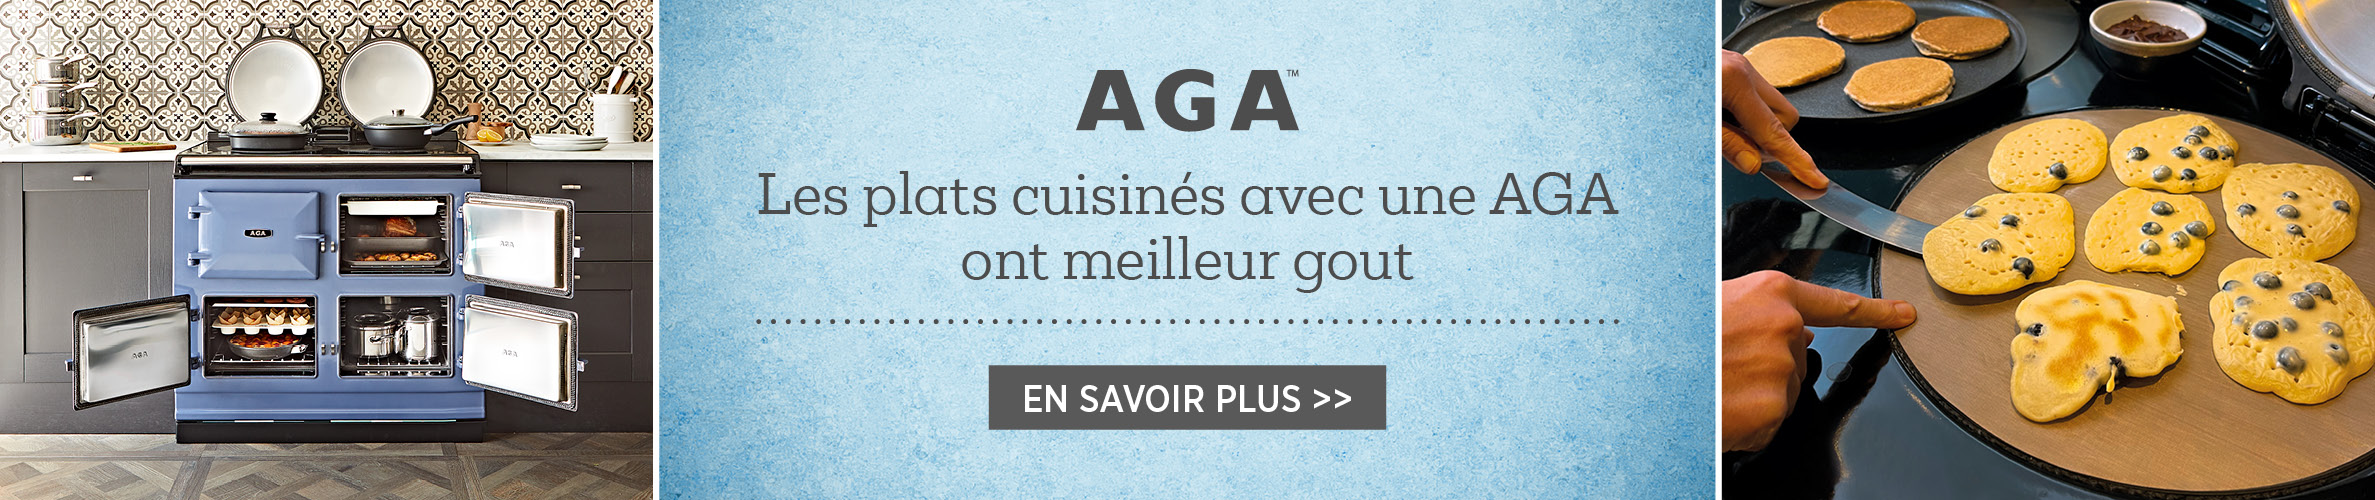 AGA Food Tastes Better - French